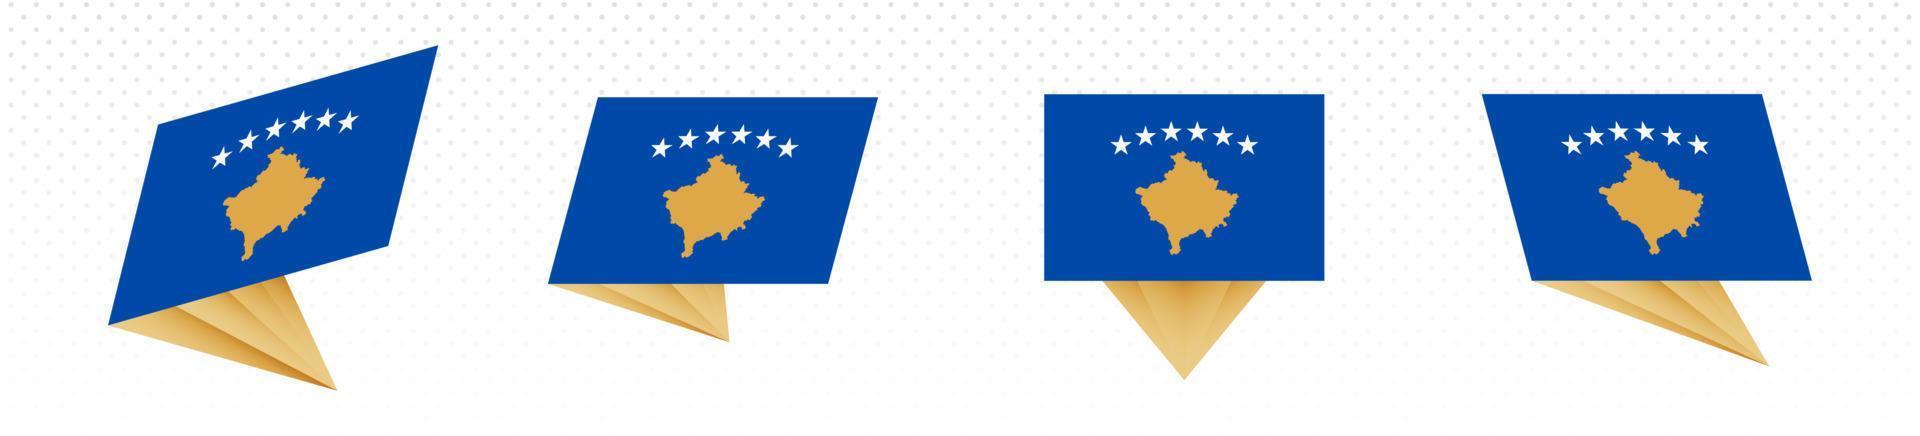 Flagge des Kosovo im modernen abstrakten Design, Flaggensatz. vektor